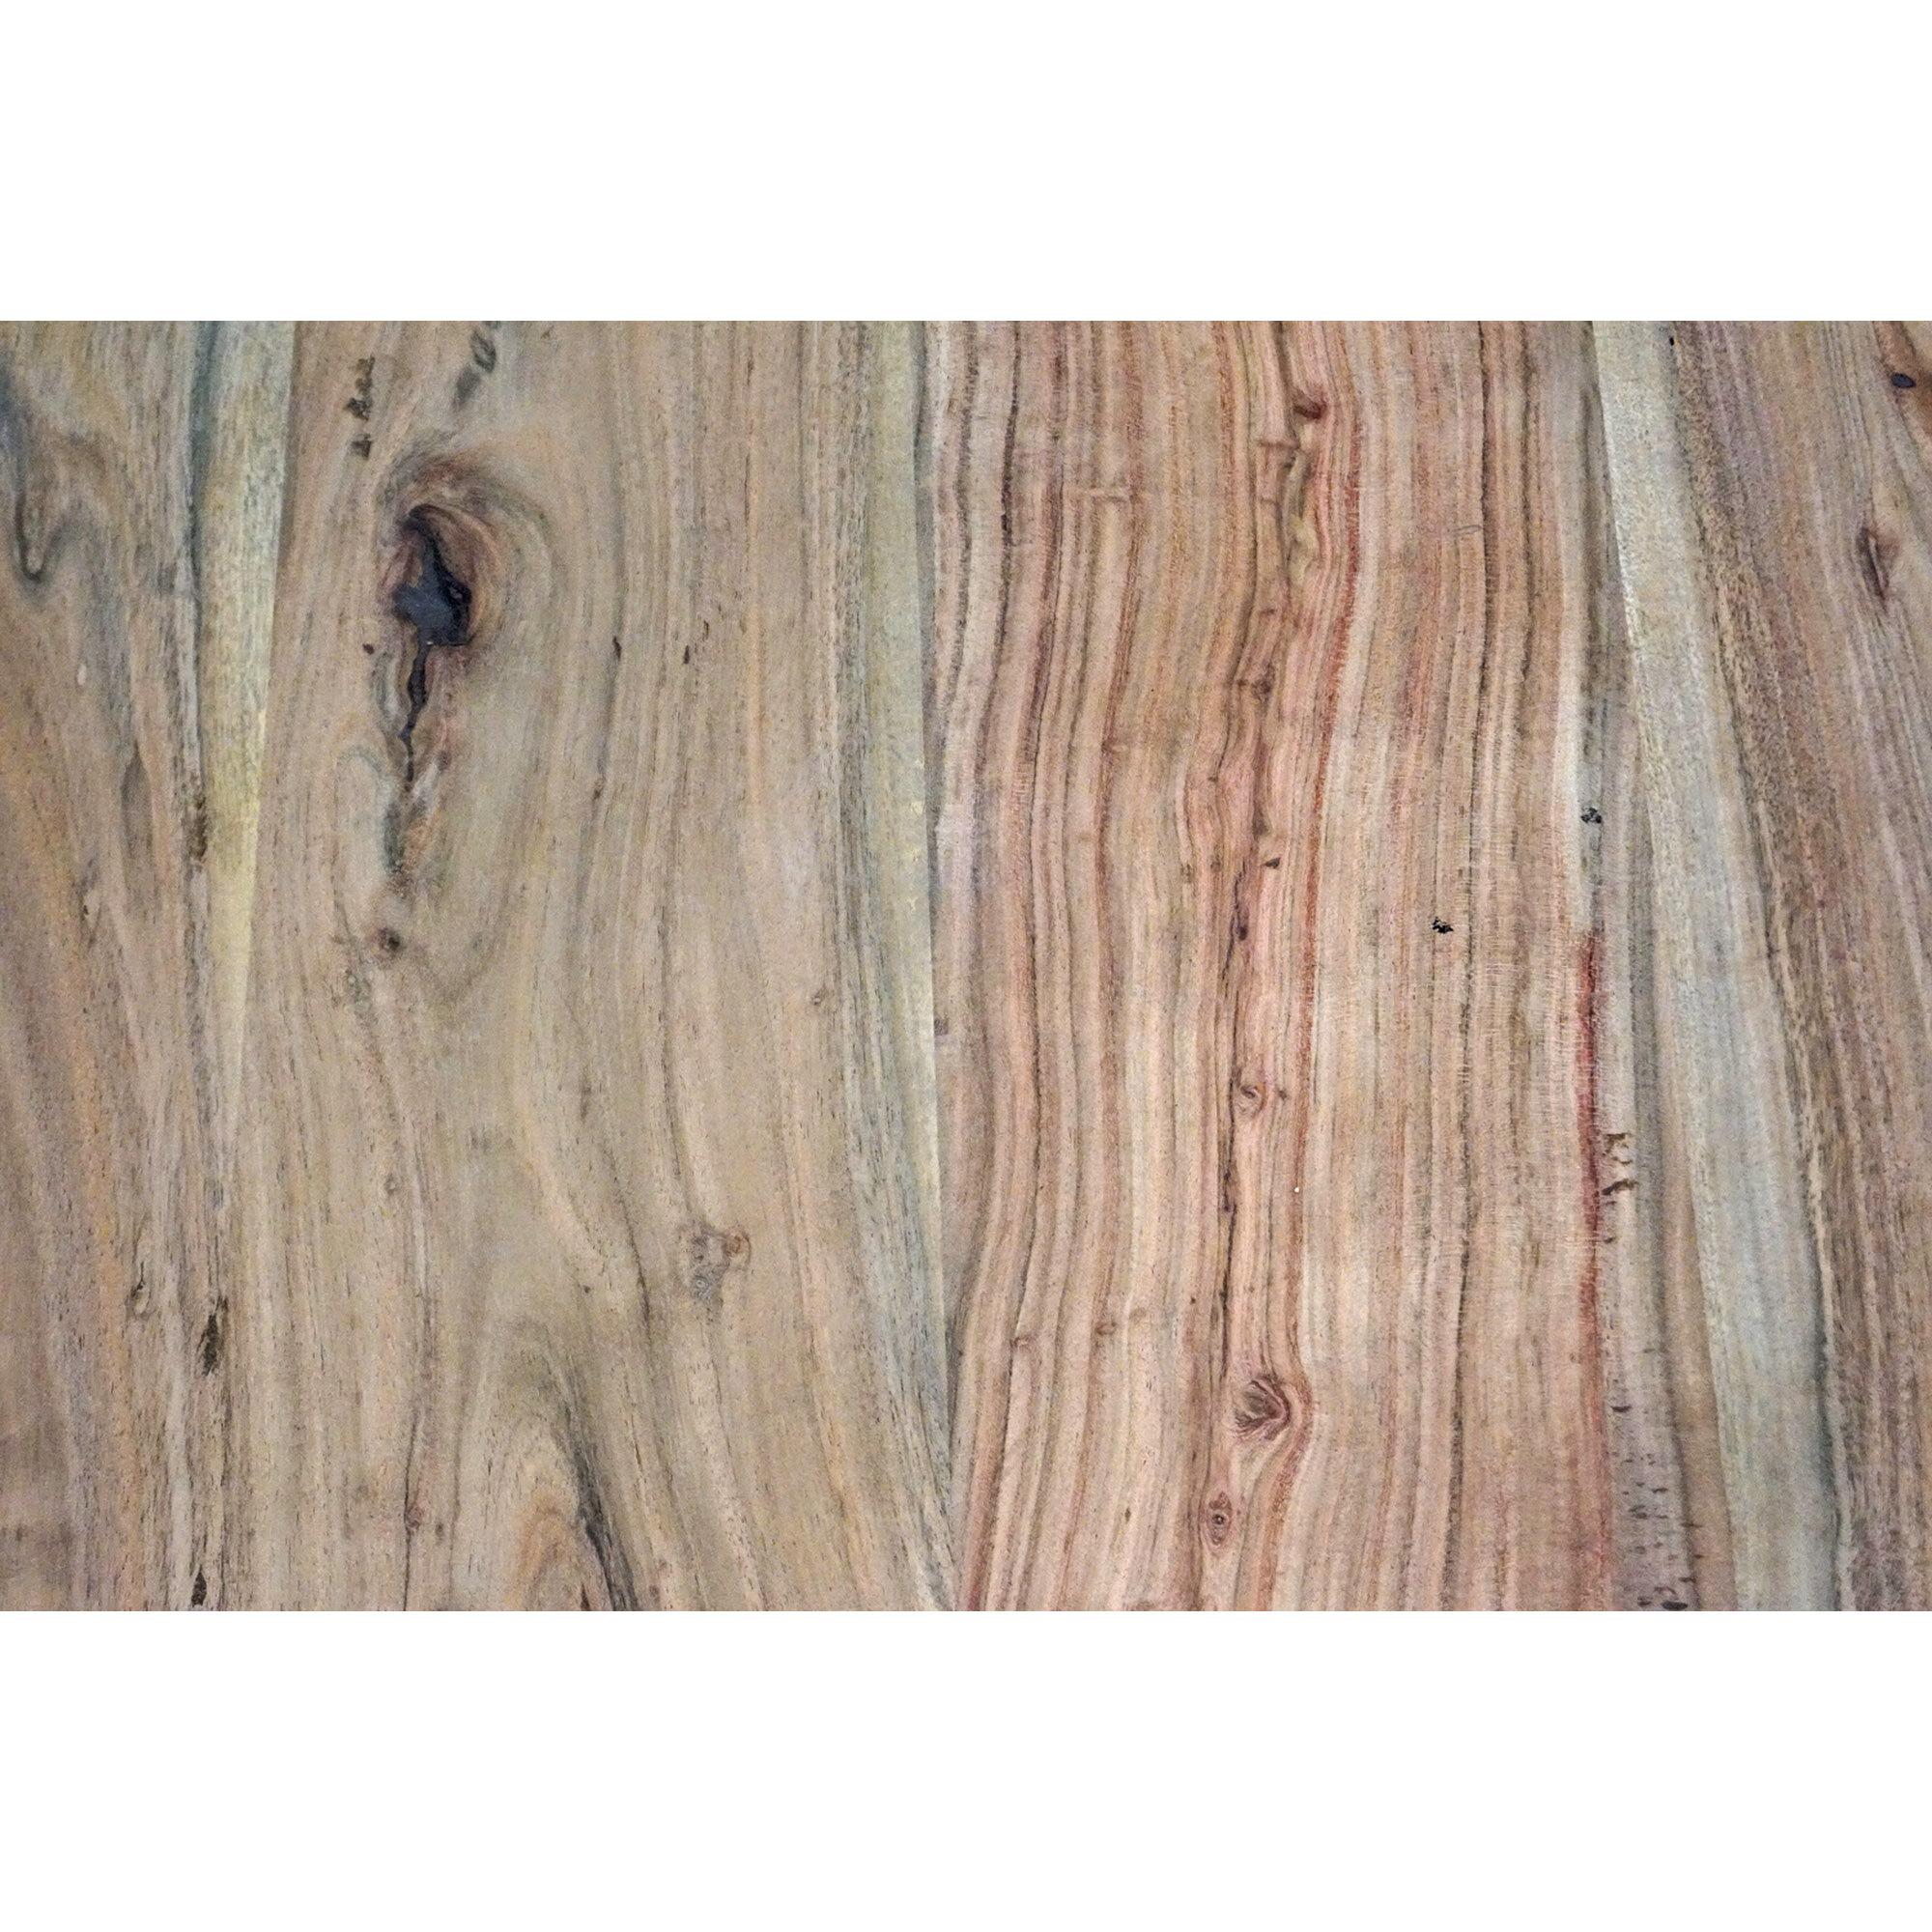  Sinan massiv bordplade i rustikt træ - Ø70 cm fra Trademark Living i Træ (Varenr: SG1921)